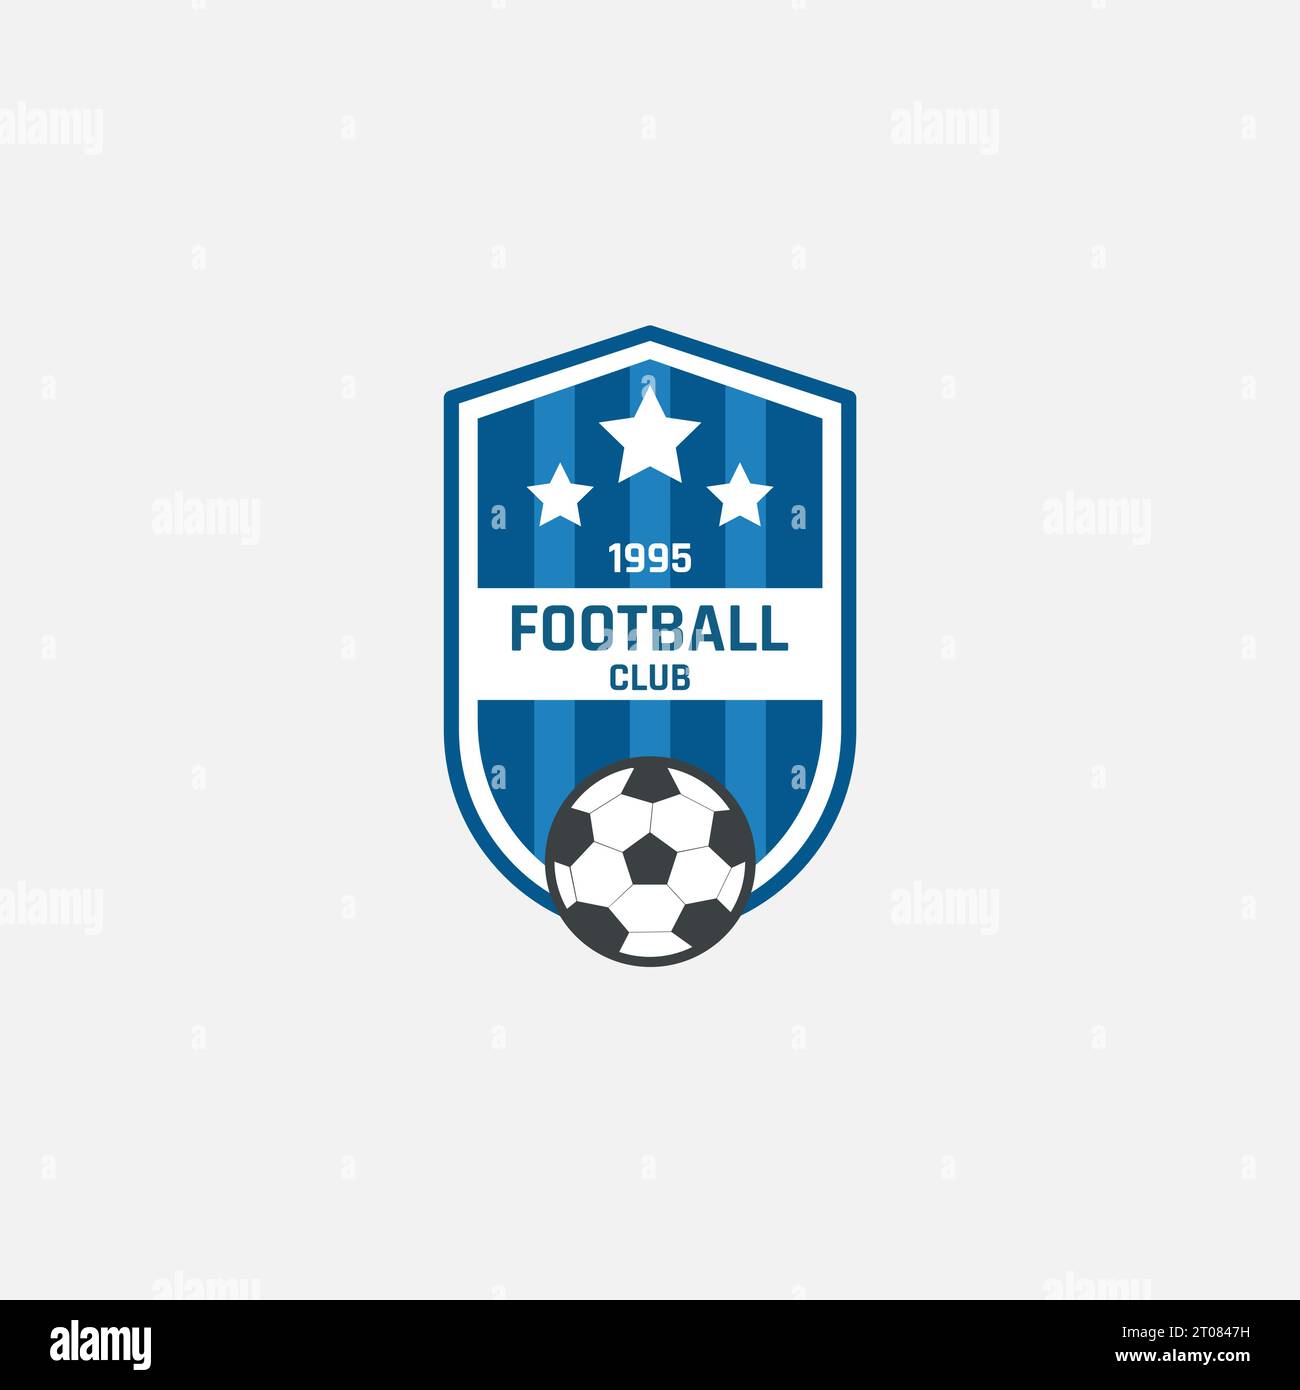 Football club emblem logo with a blue shield. Stock Vector